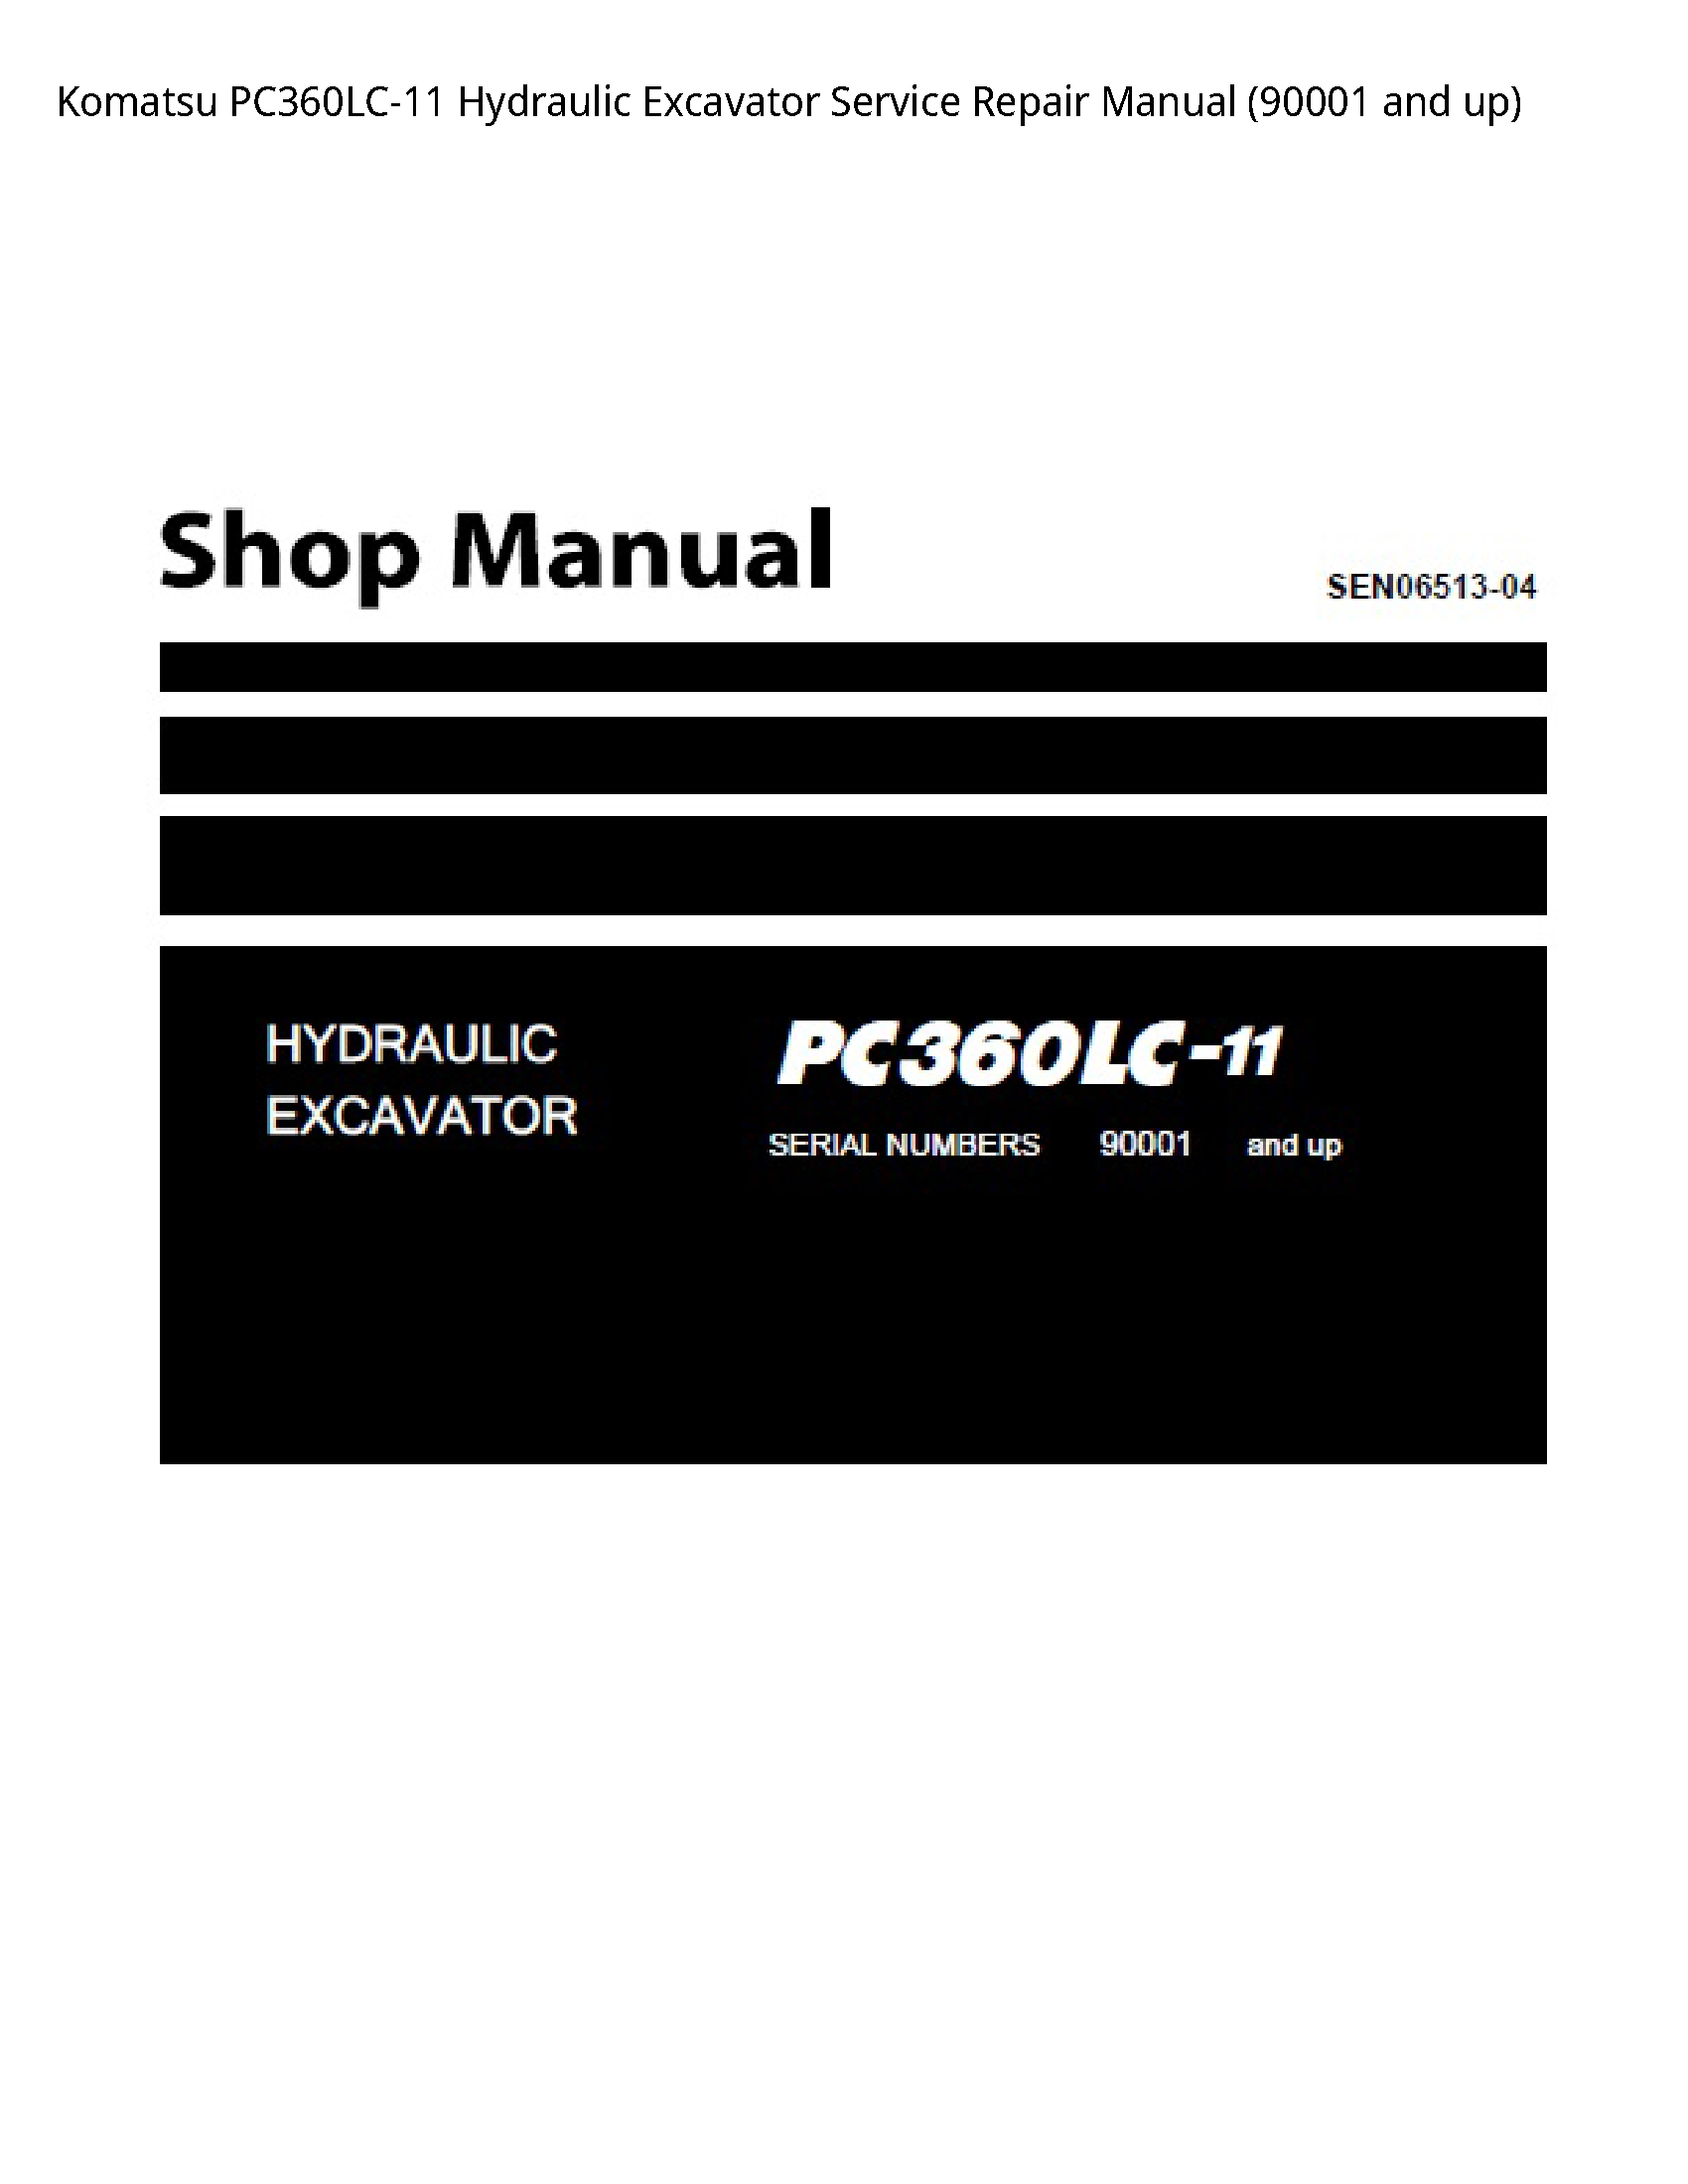 KOMATSU PC360LC-11 Hydraulic Excavator manual